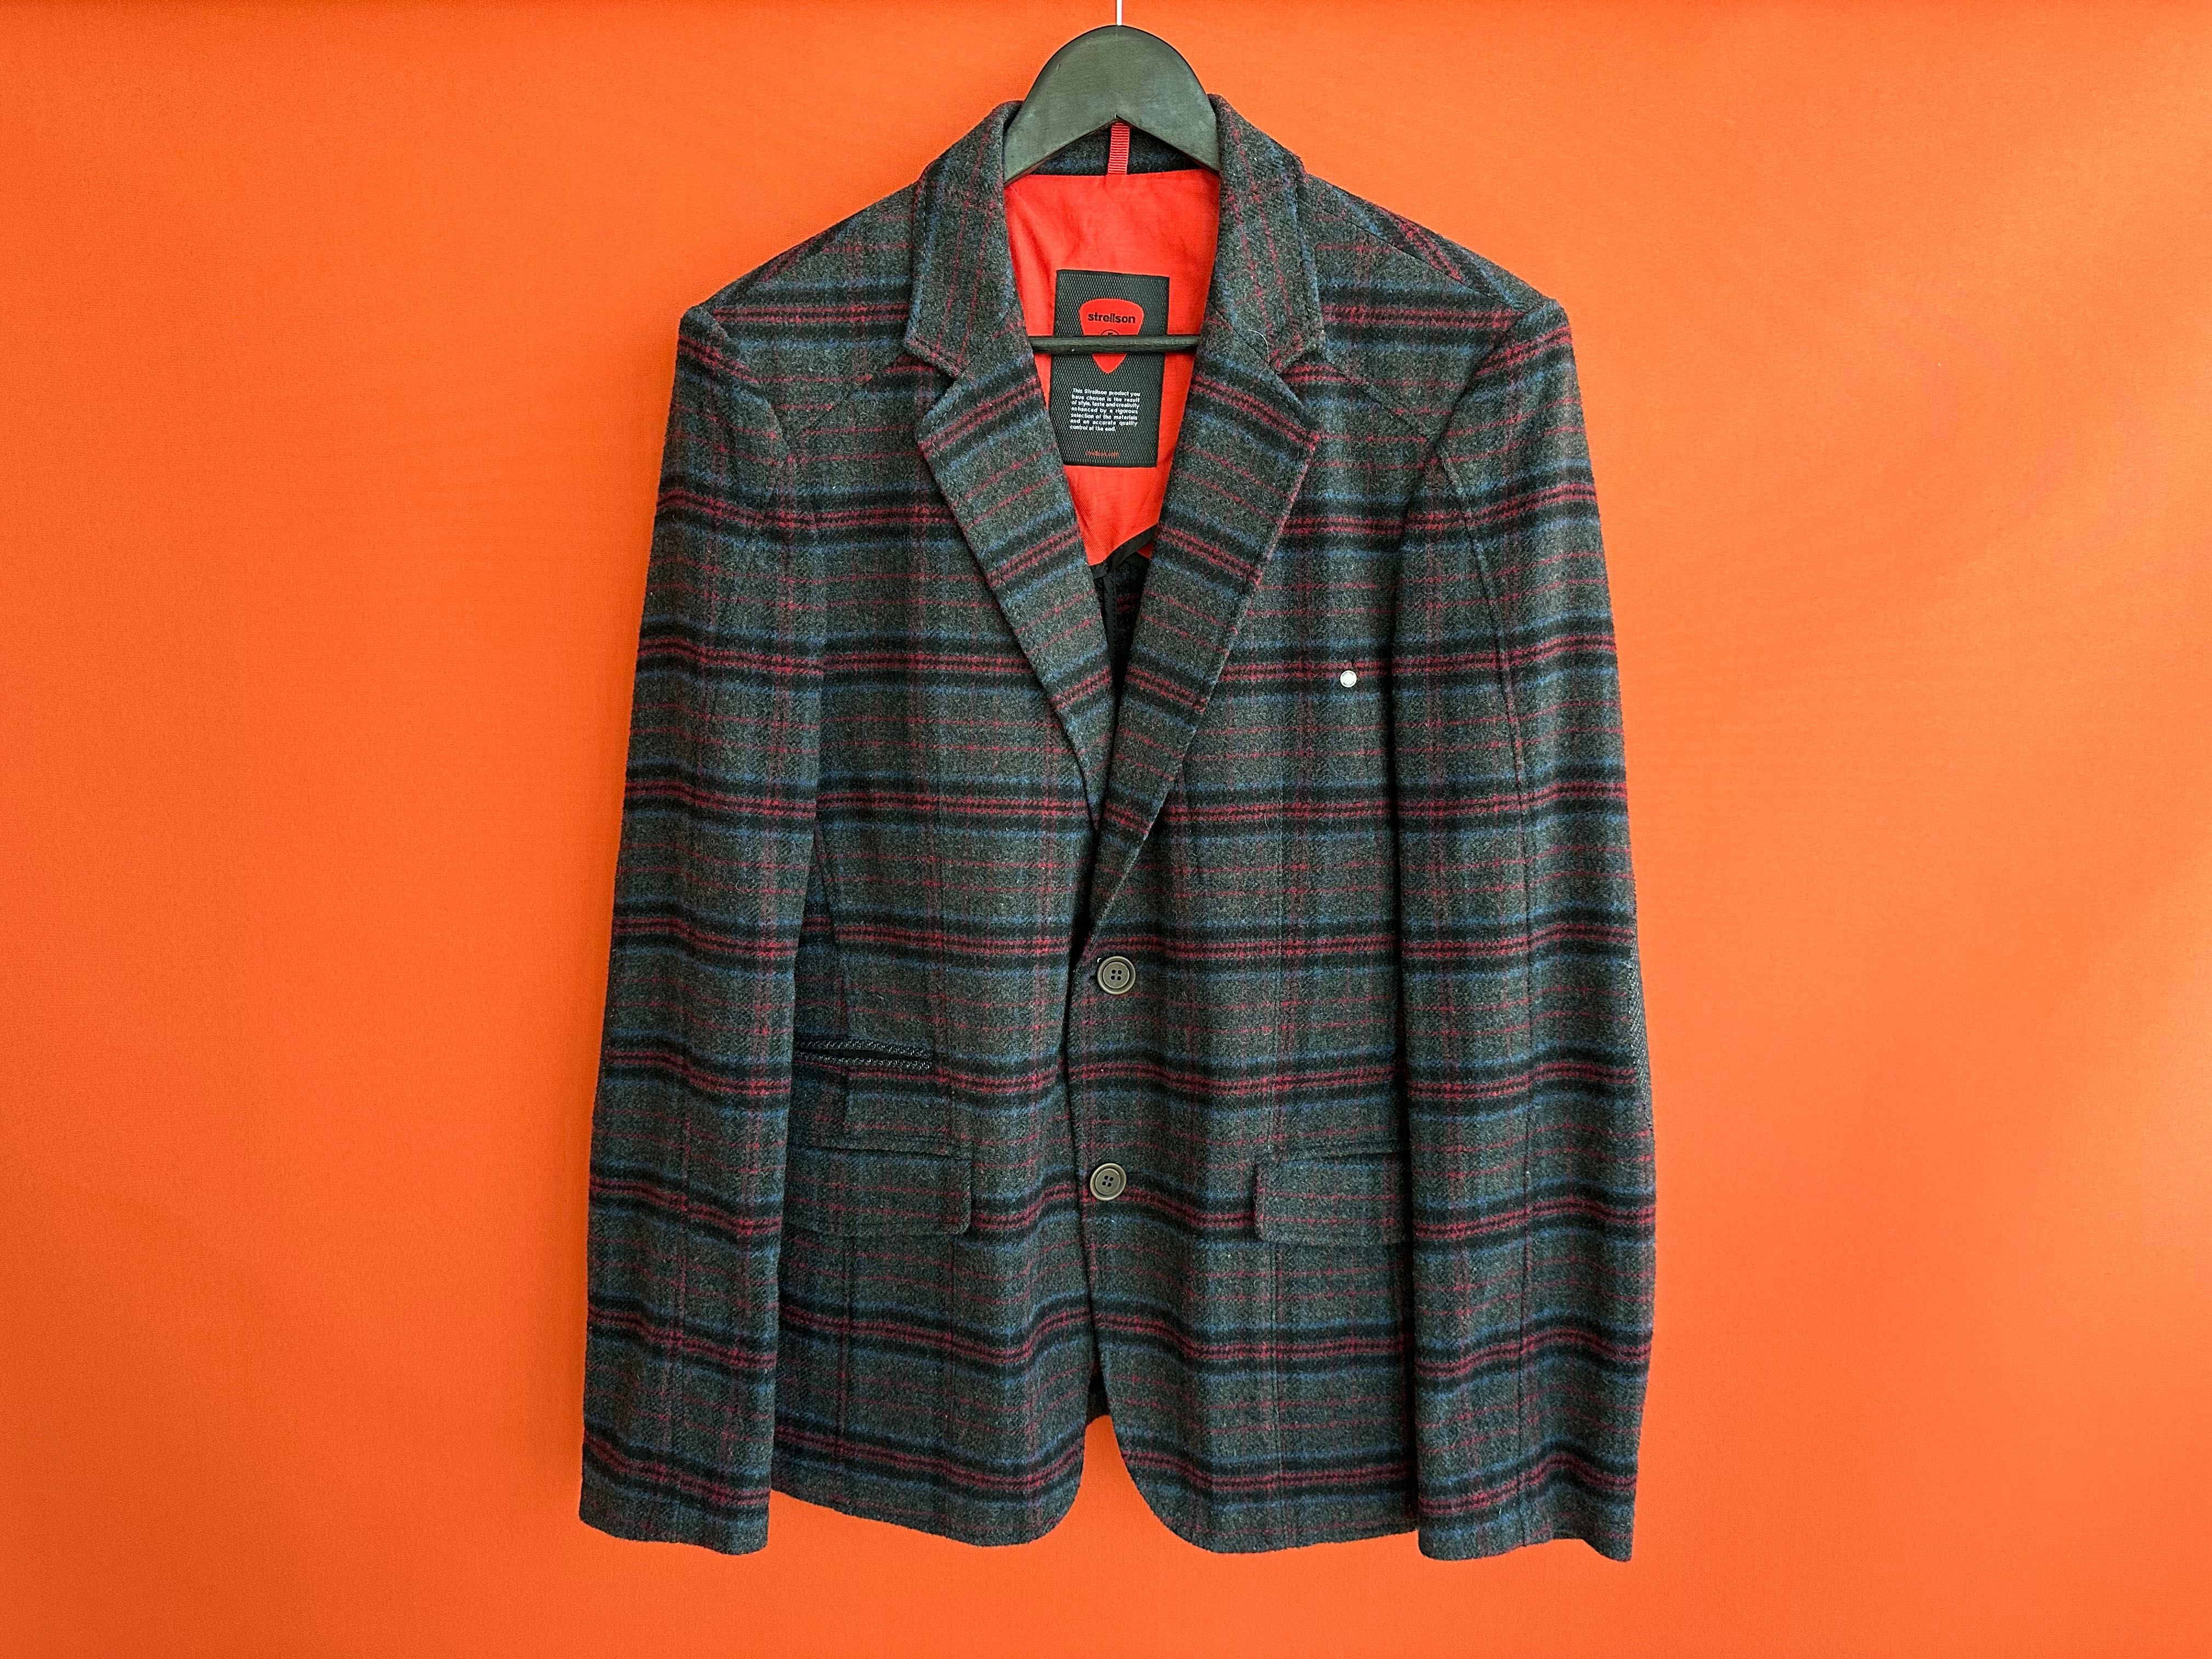 Strellson оригинал мужской пиджак Блэйзер пальто размер M Б У